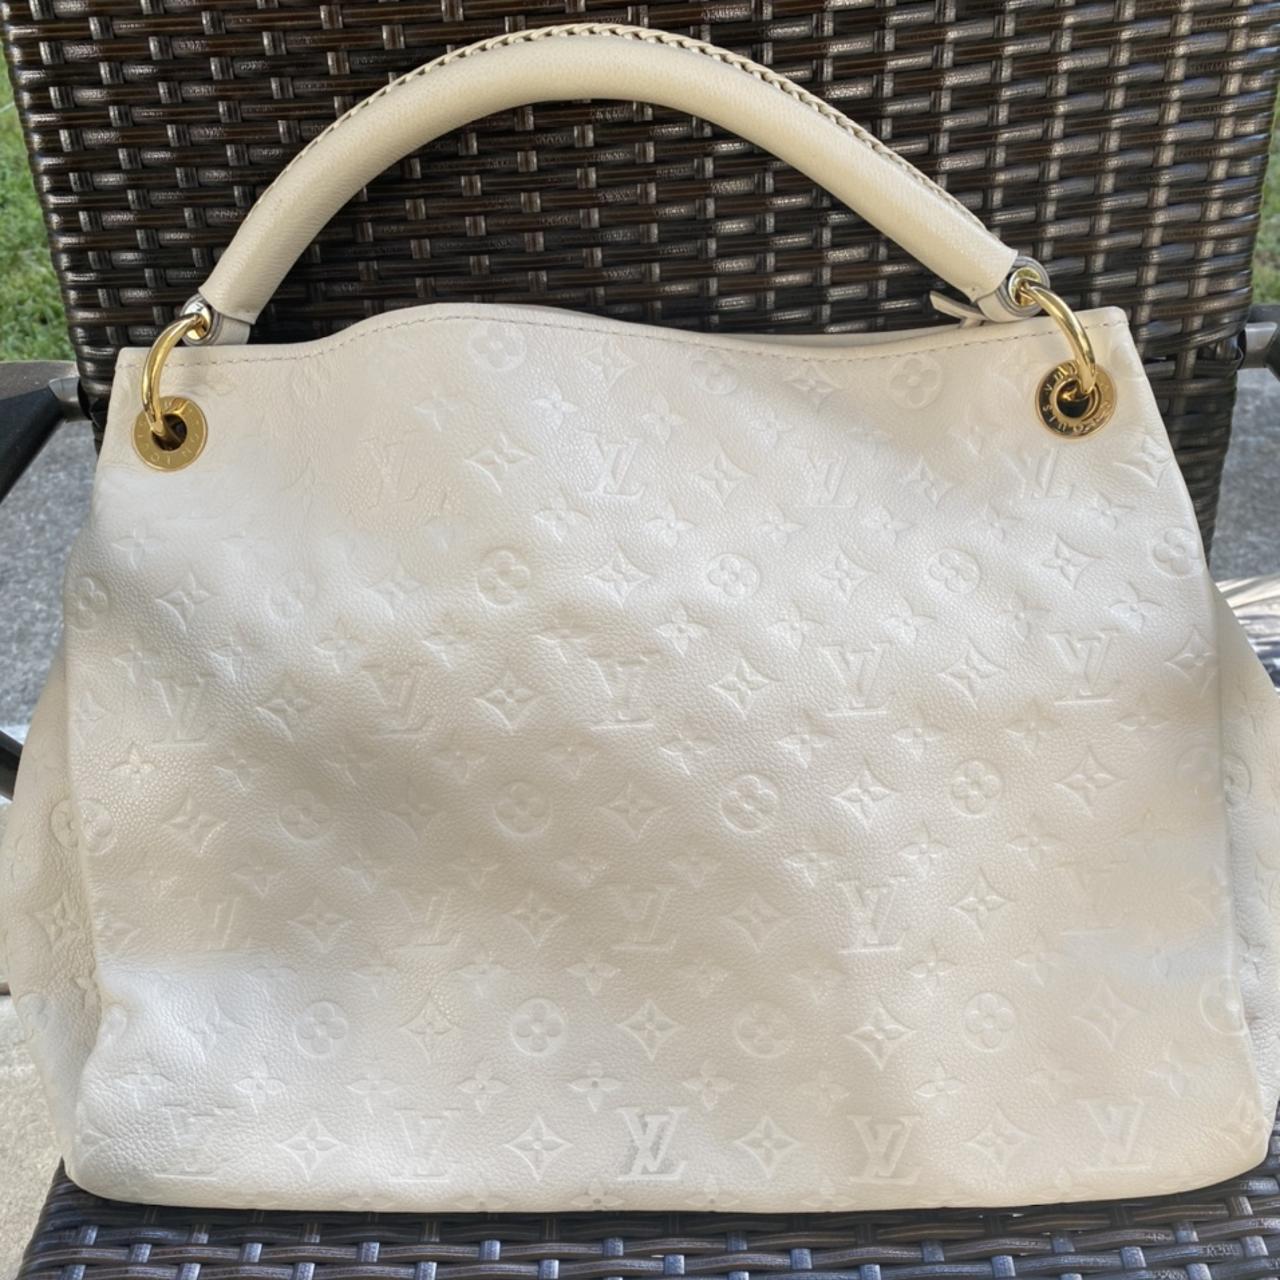 Louis Vuitton White Artsy MM Empreinte Monogram Shoulder Bag